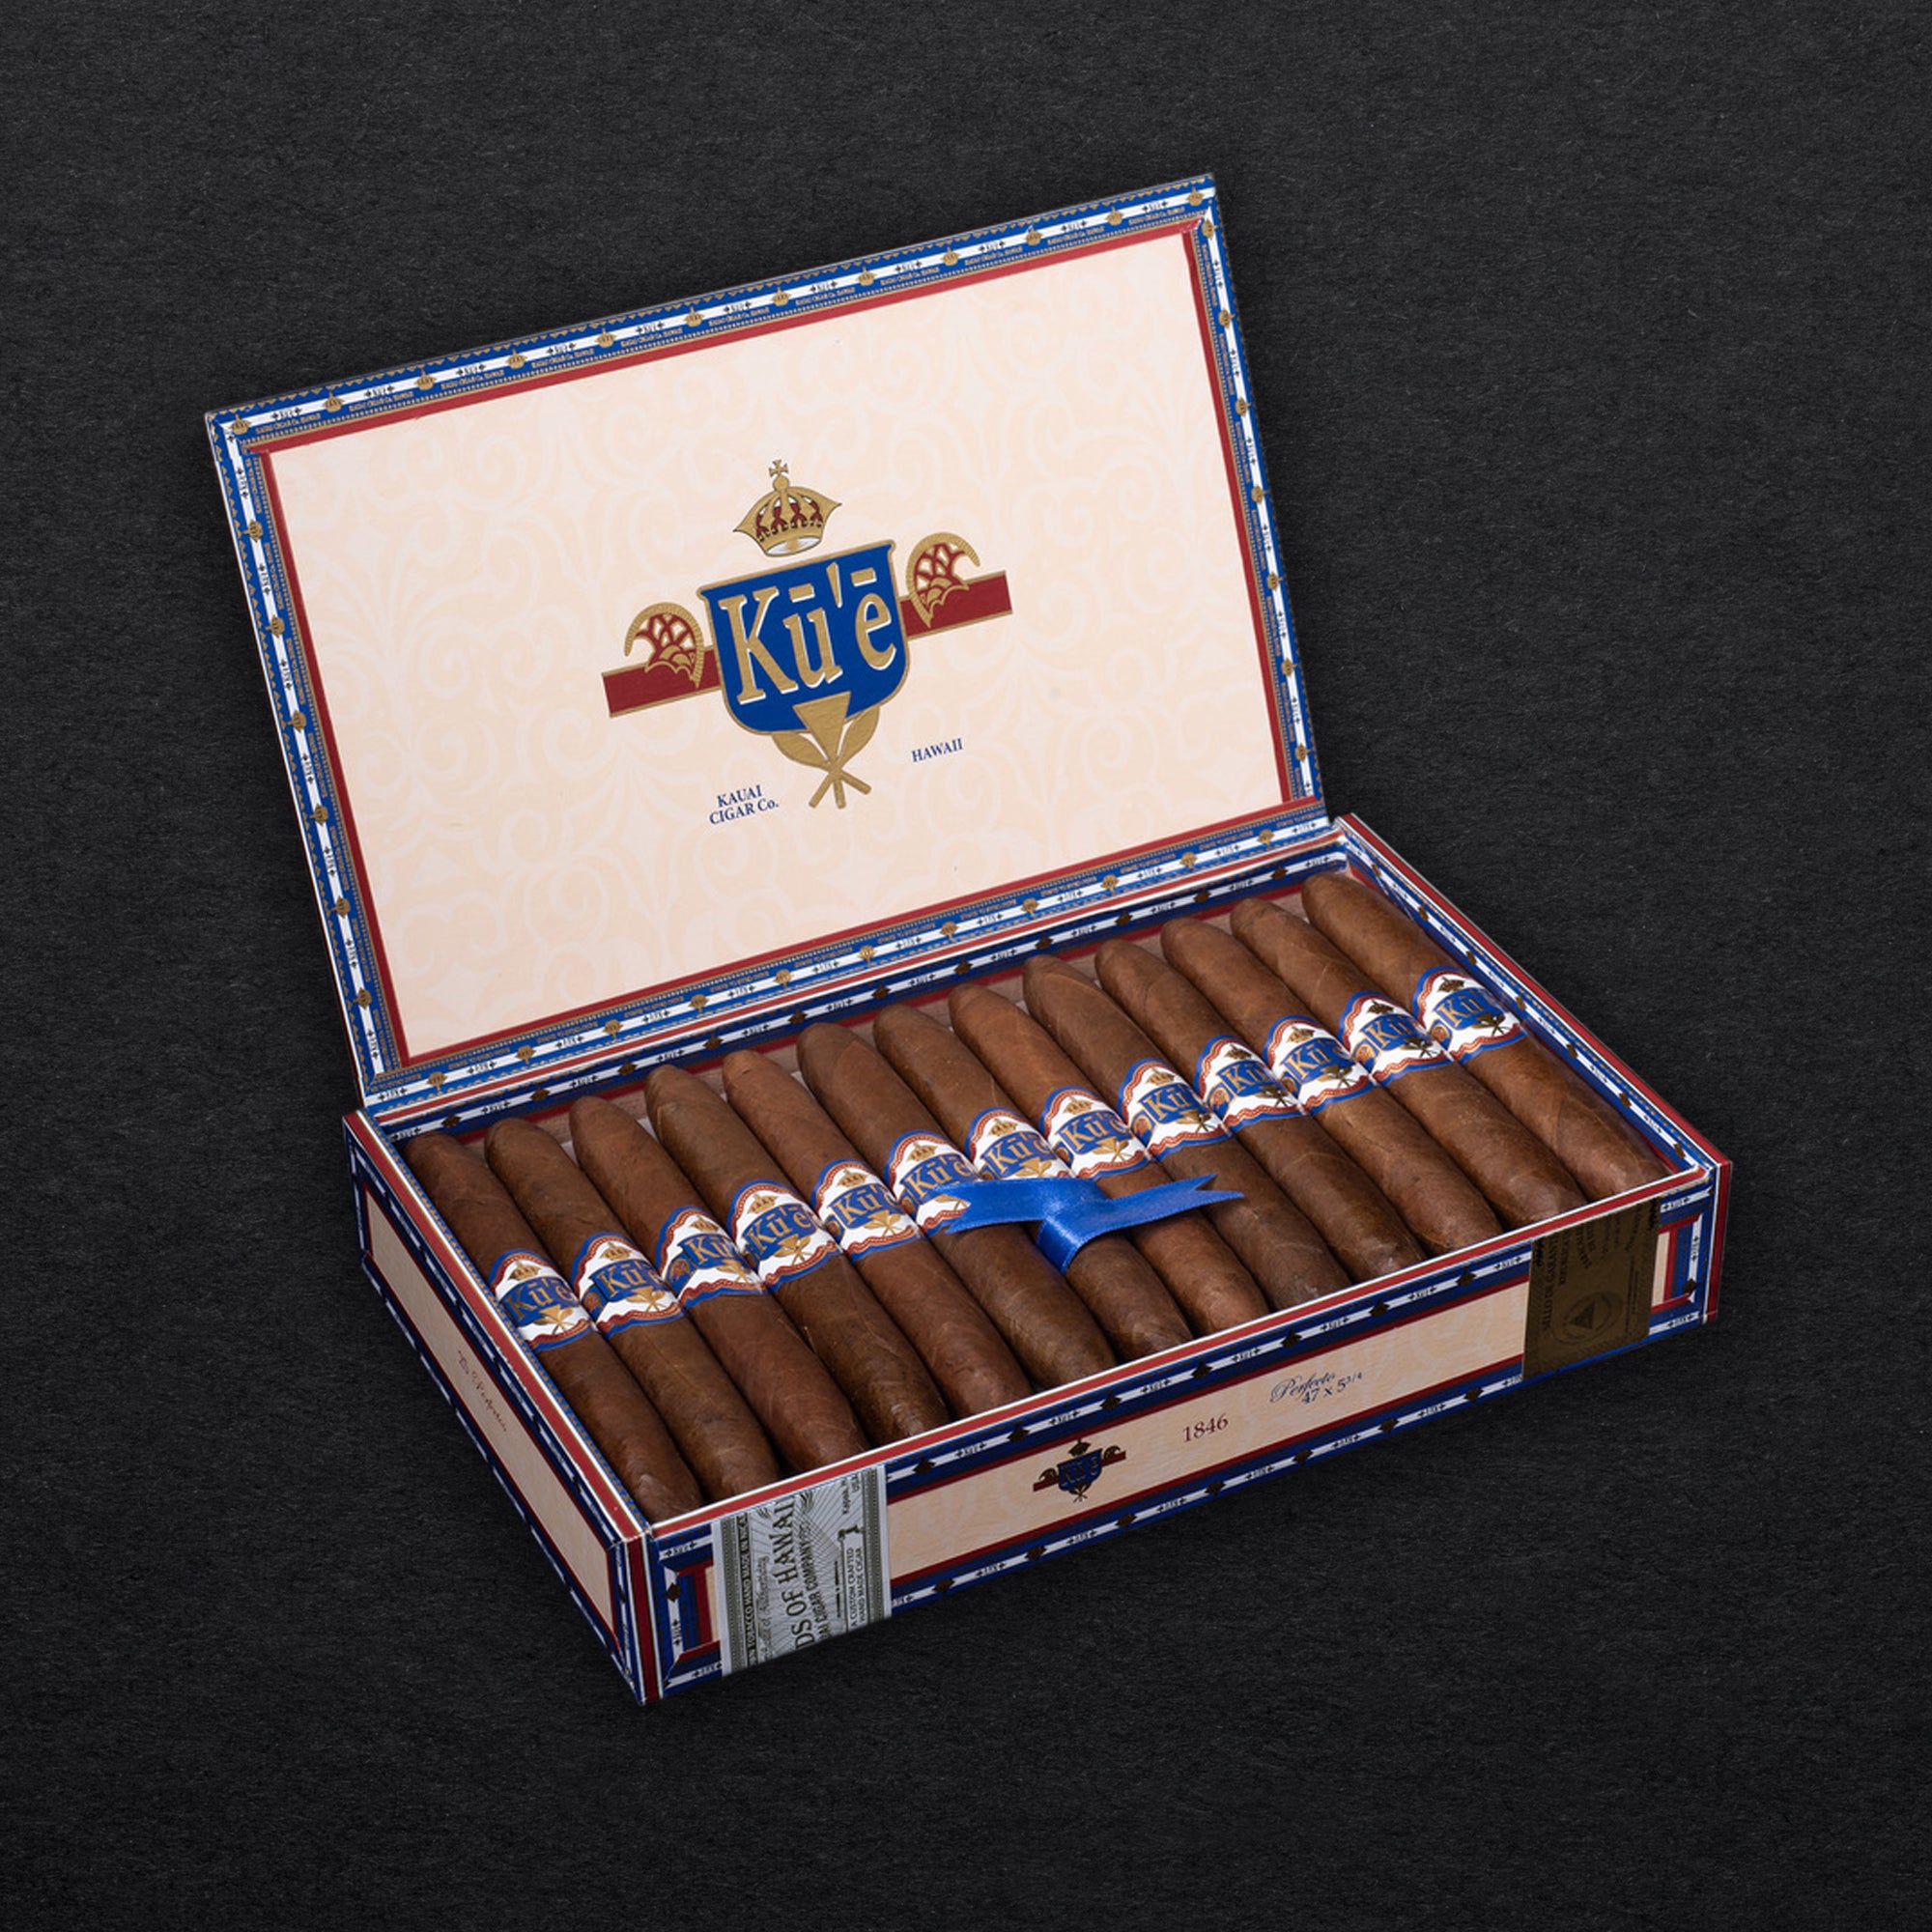 Kuʻe 1846 Cigars